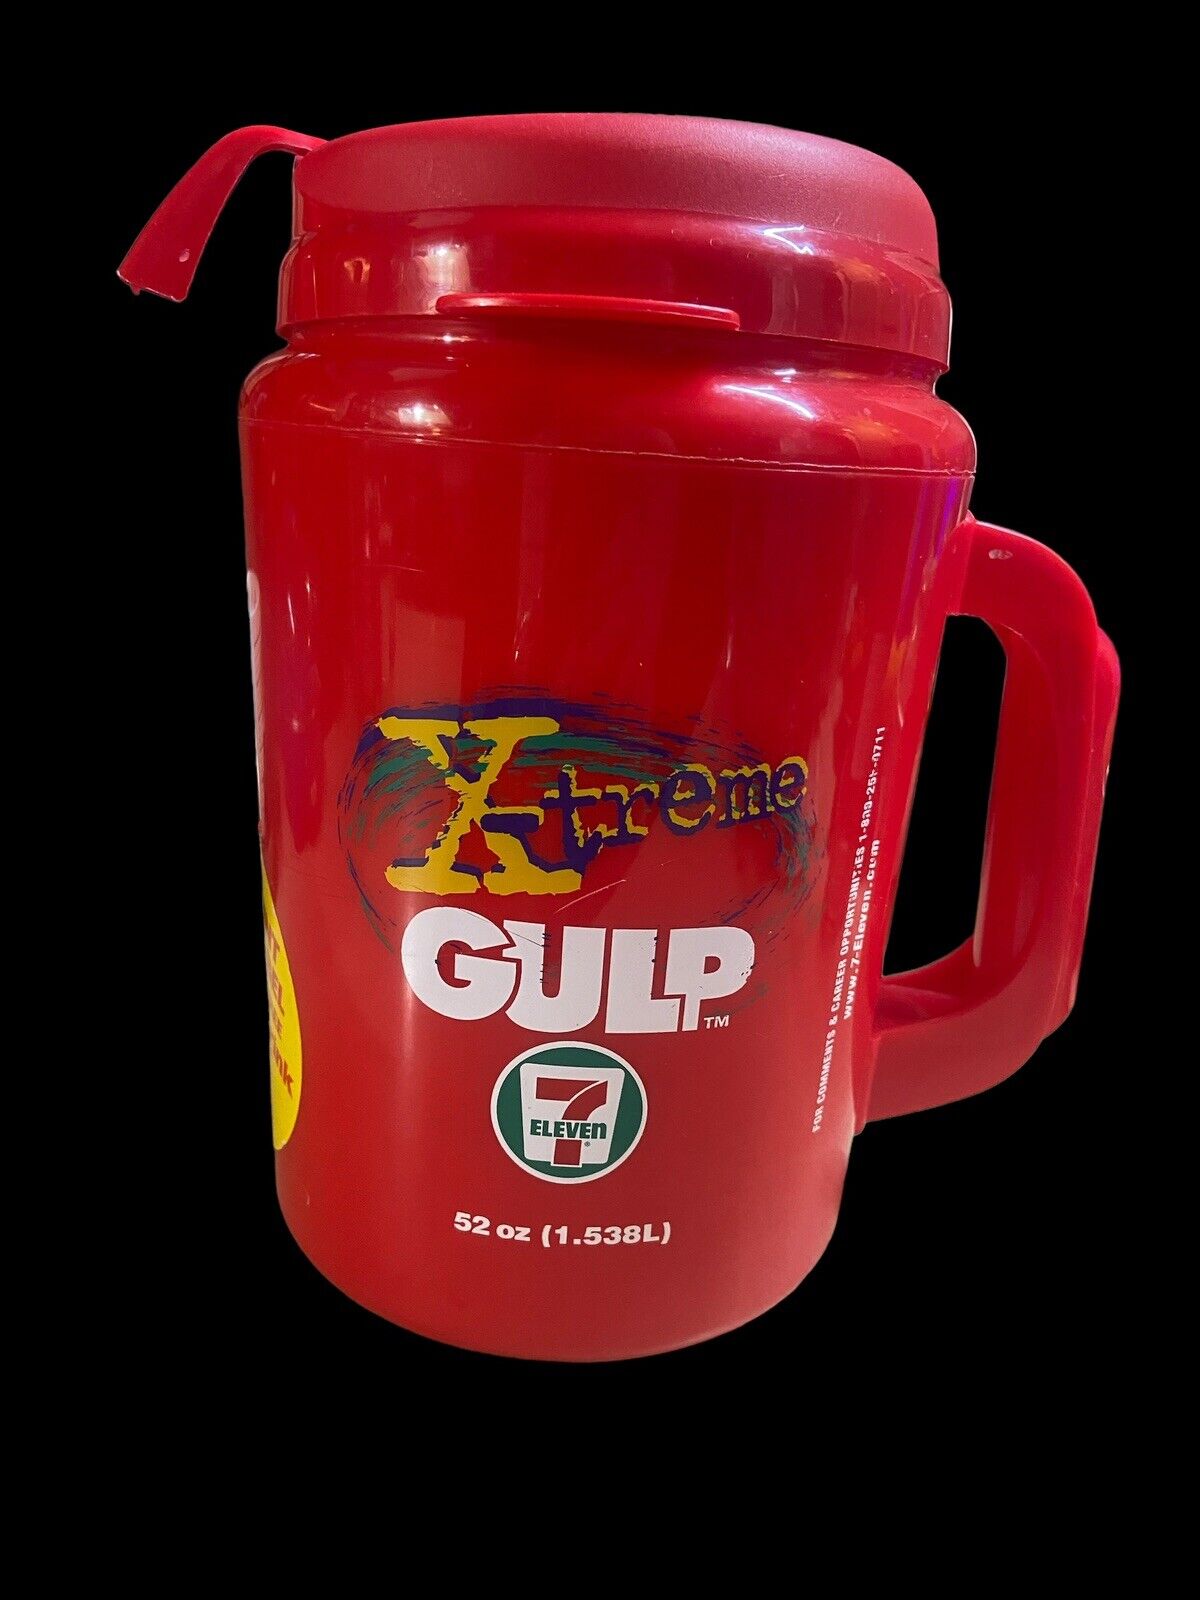 Vintage X-treme Gulp 7-11 Insulated Aladdin 52 oz Drink Travel Mug. Red